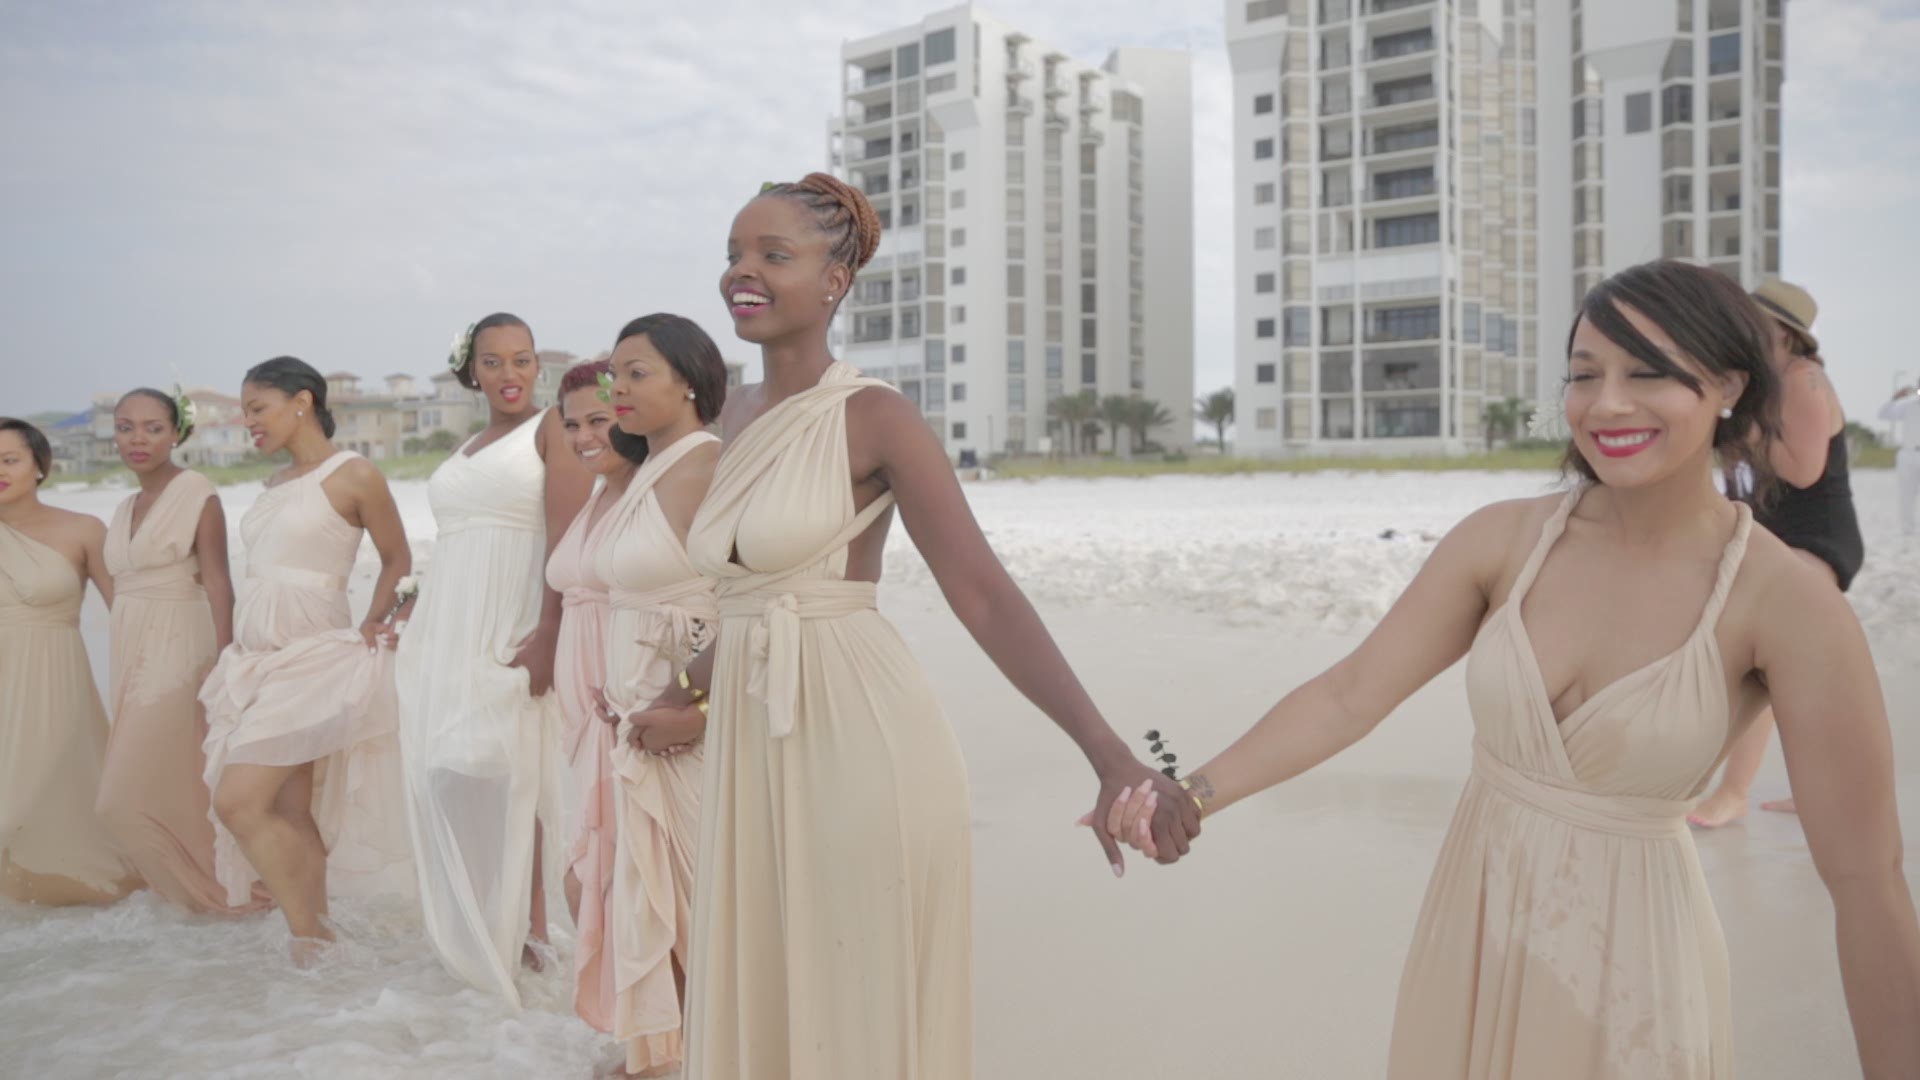 34 bridesmaids get ready for an epic beach wedding in Destin